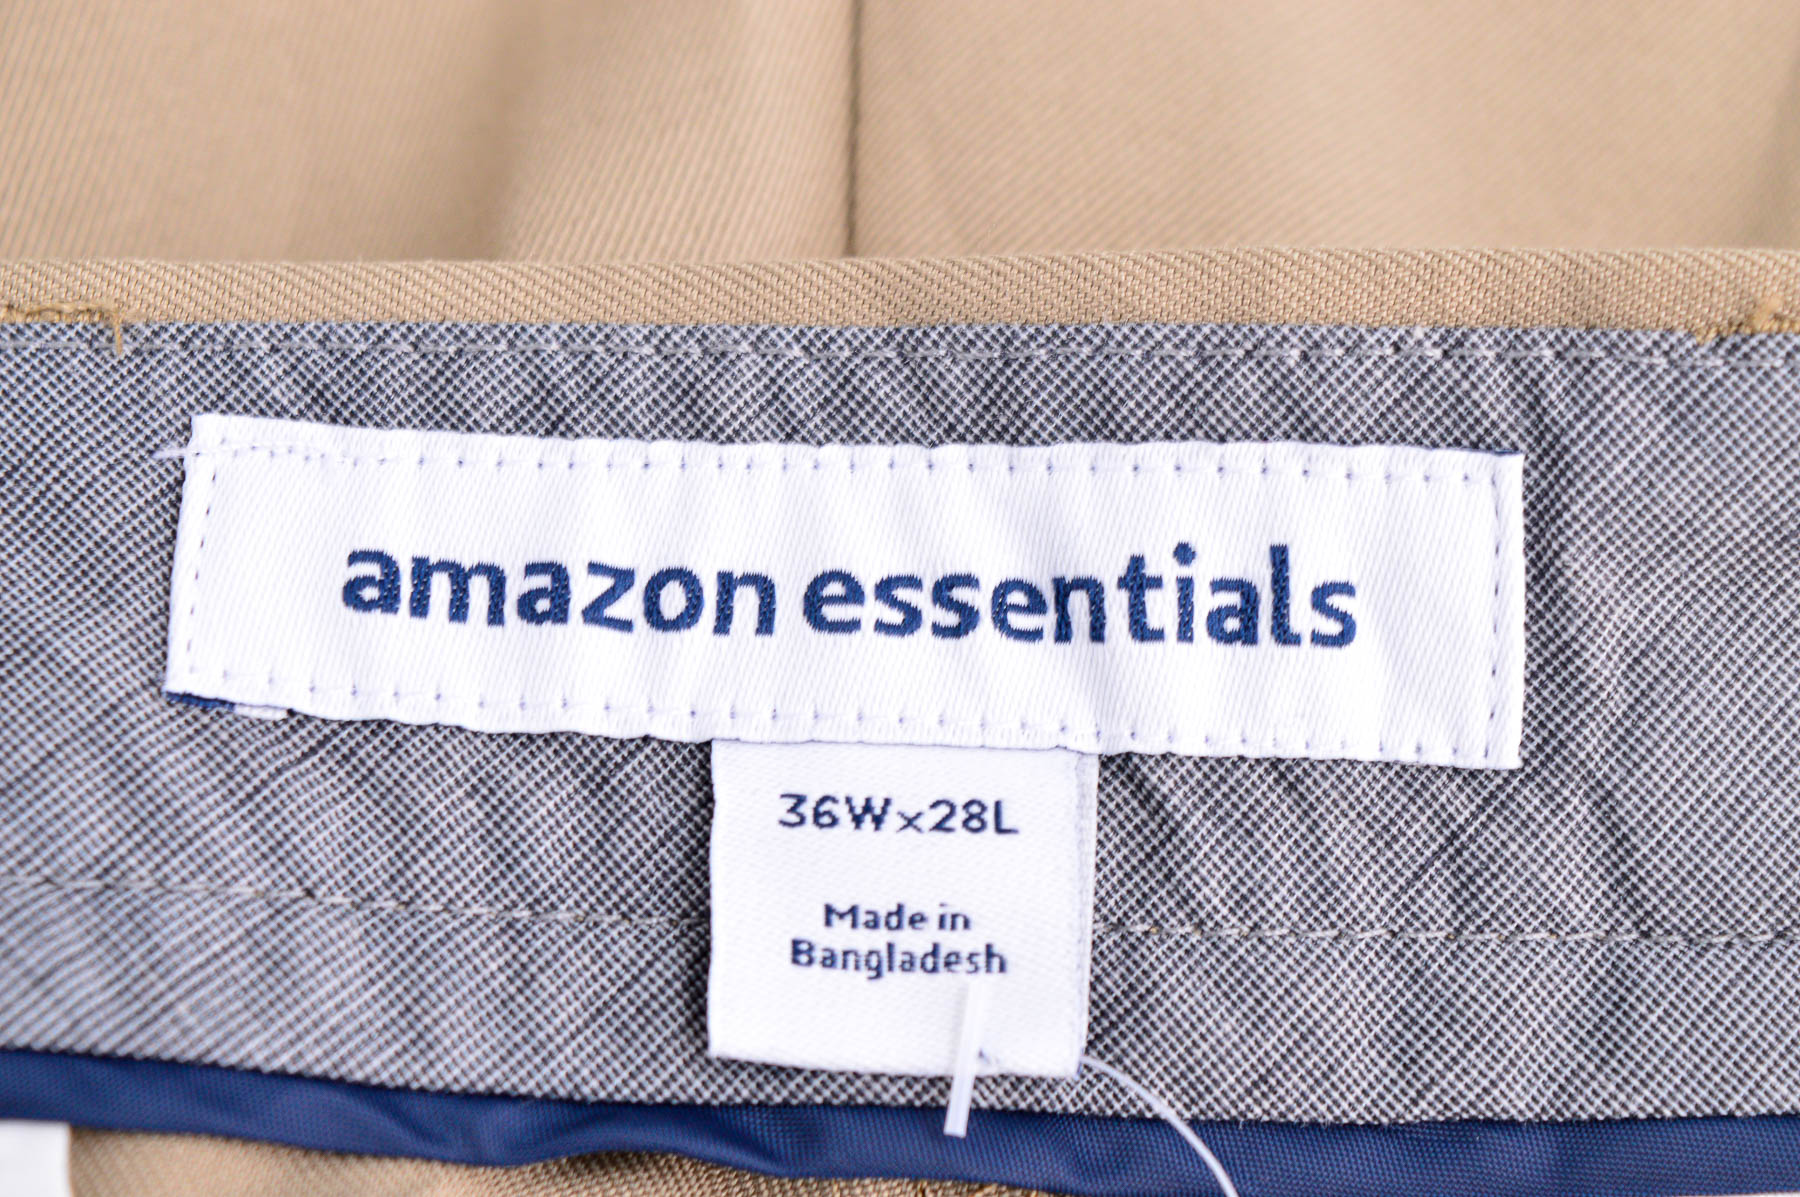 Men's trousers - Amazon essentials - 2